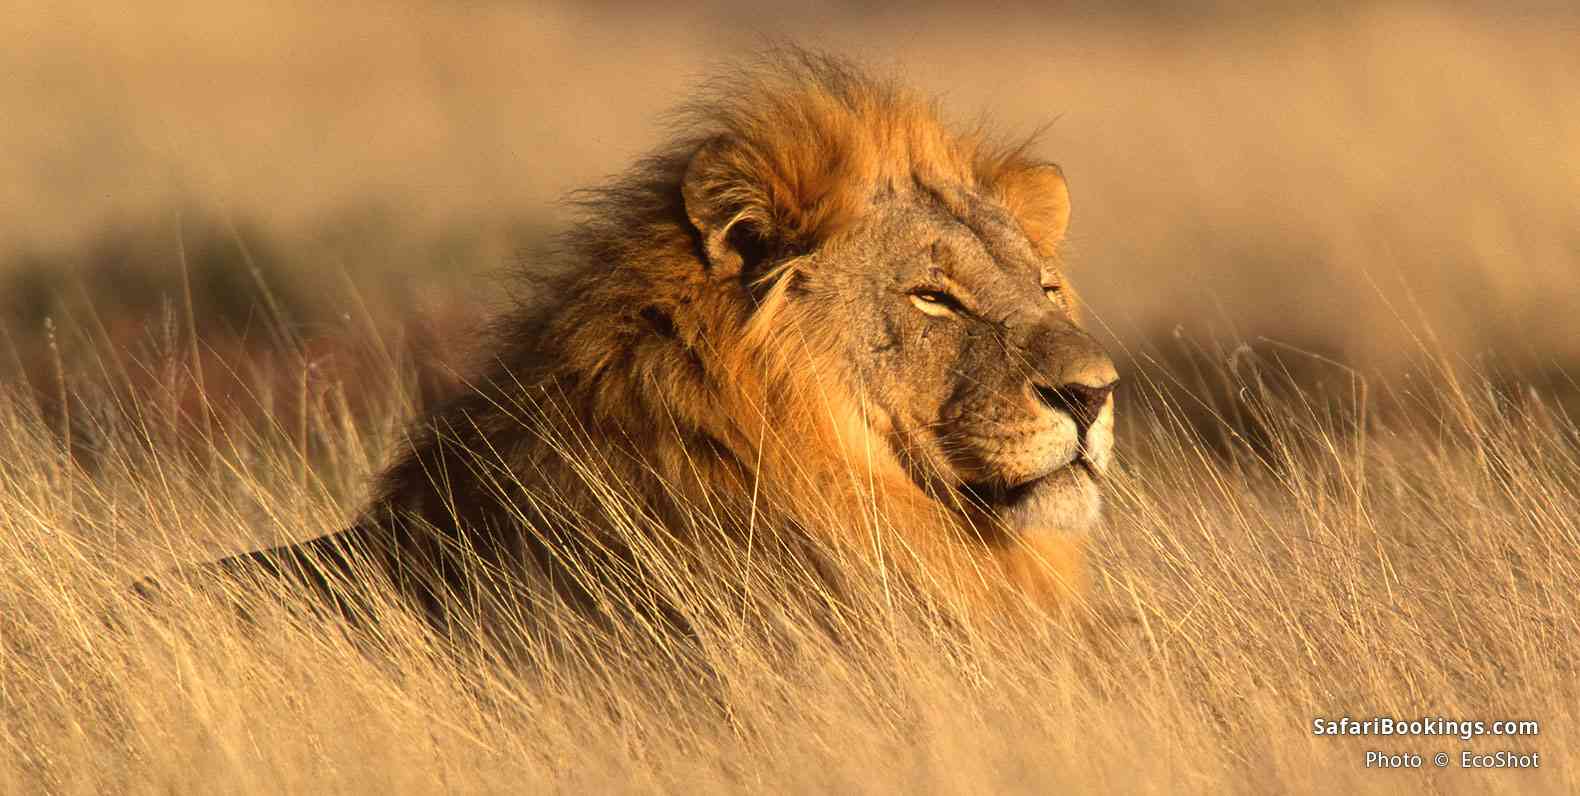 Big male lion in grass